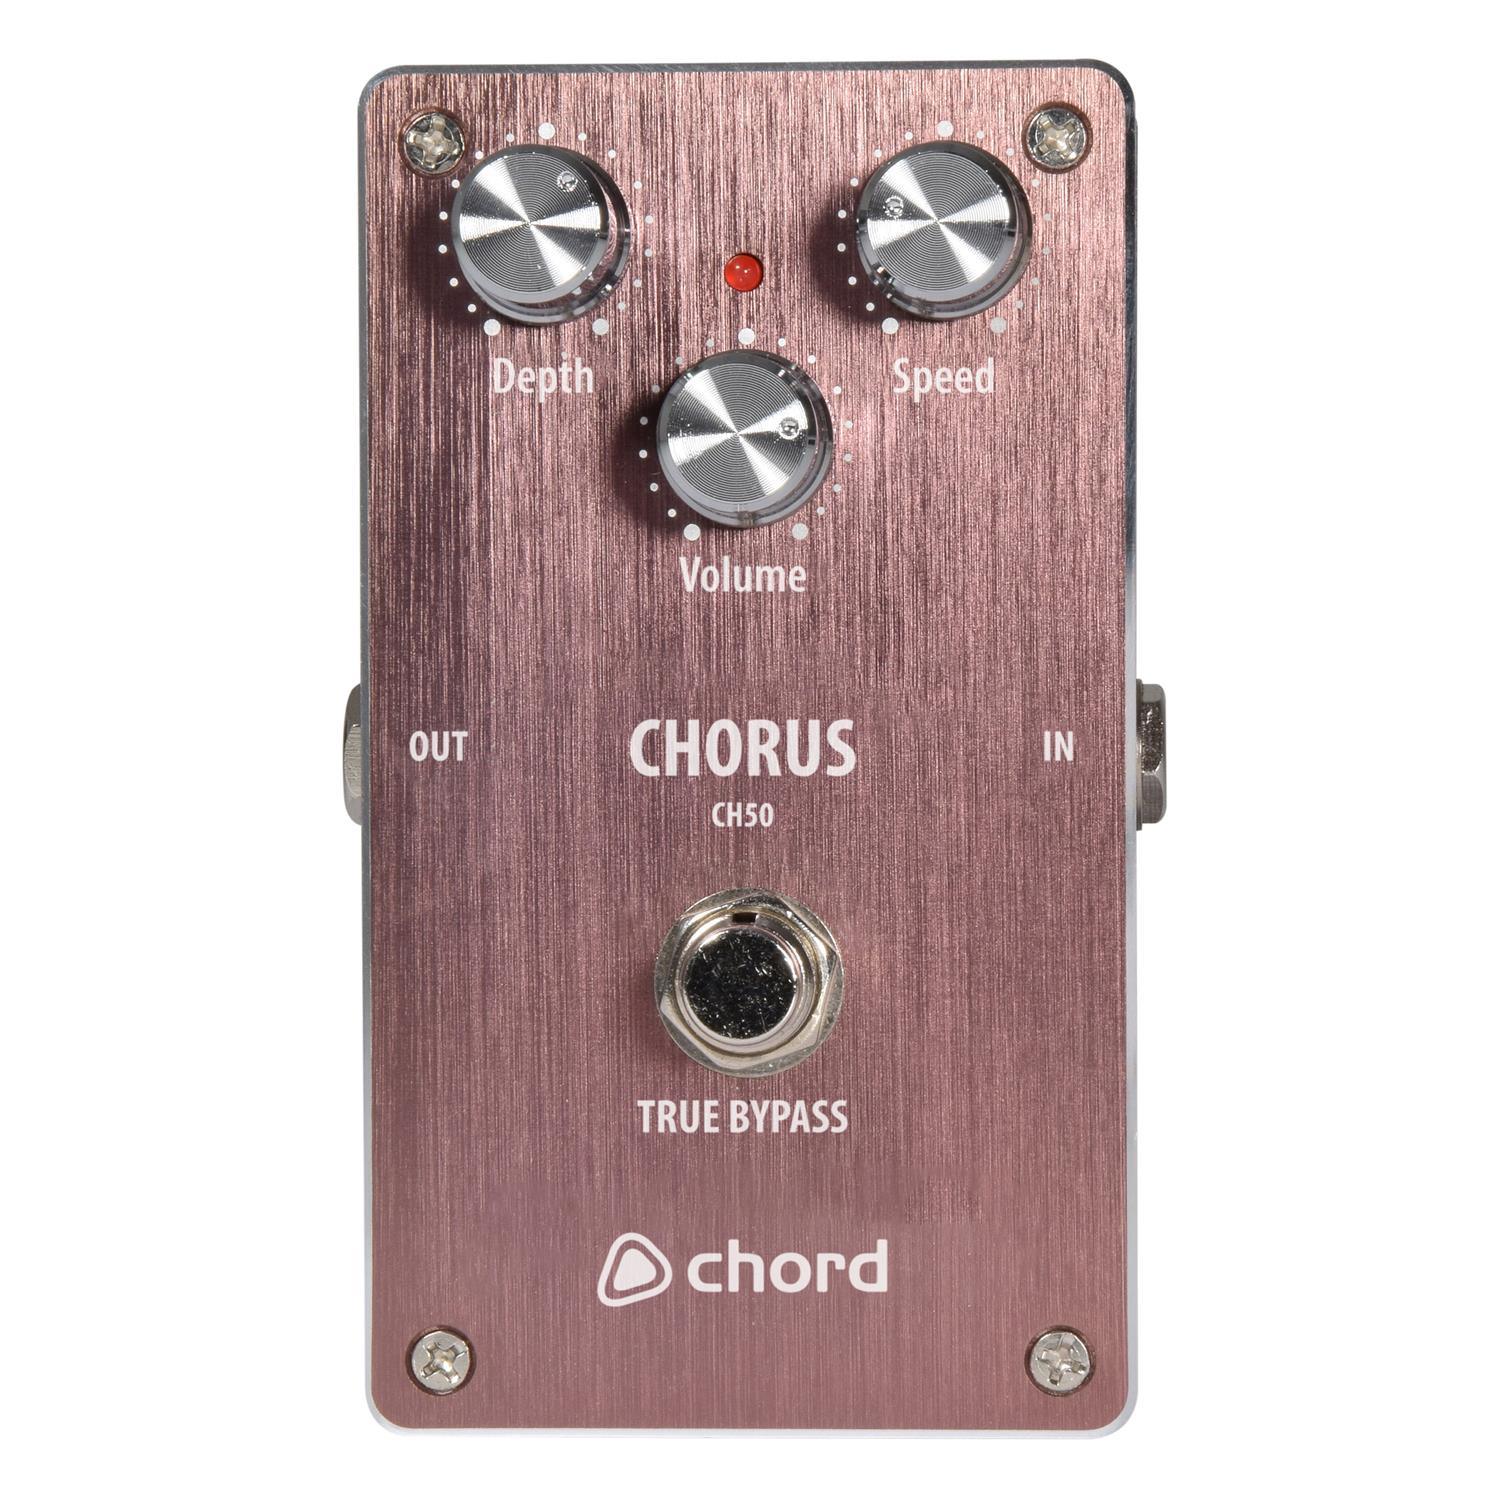 Chord CH-50 Guitar Chorus Effect Pedal - DY Pro Audio